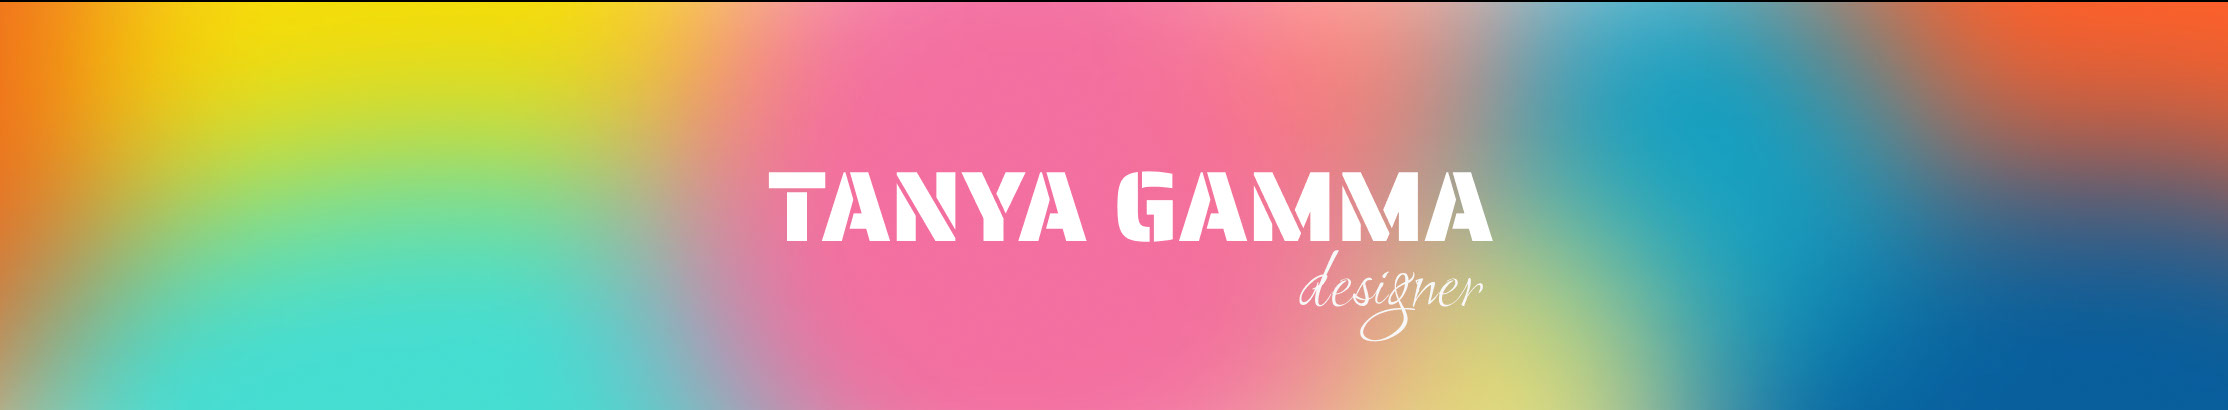 Profielbanner van Tatyana Gamma